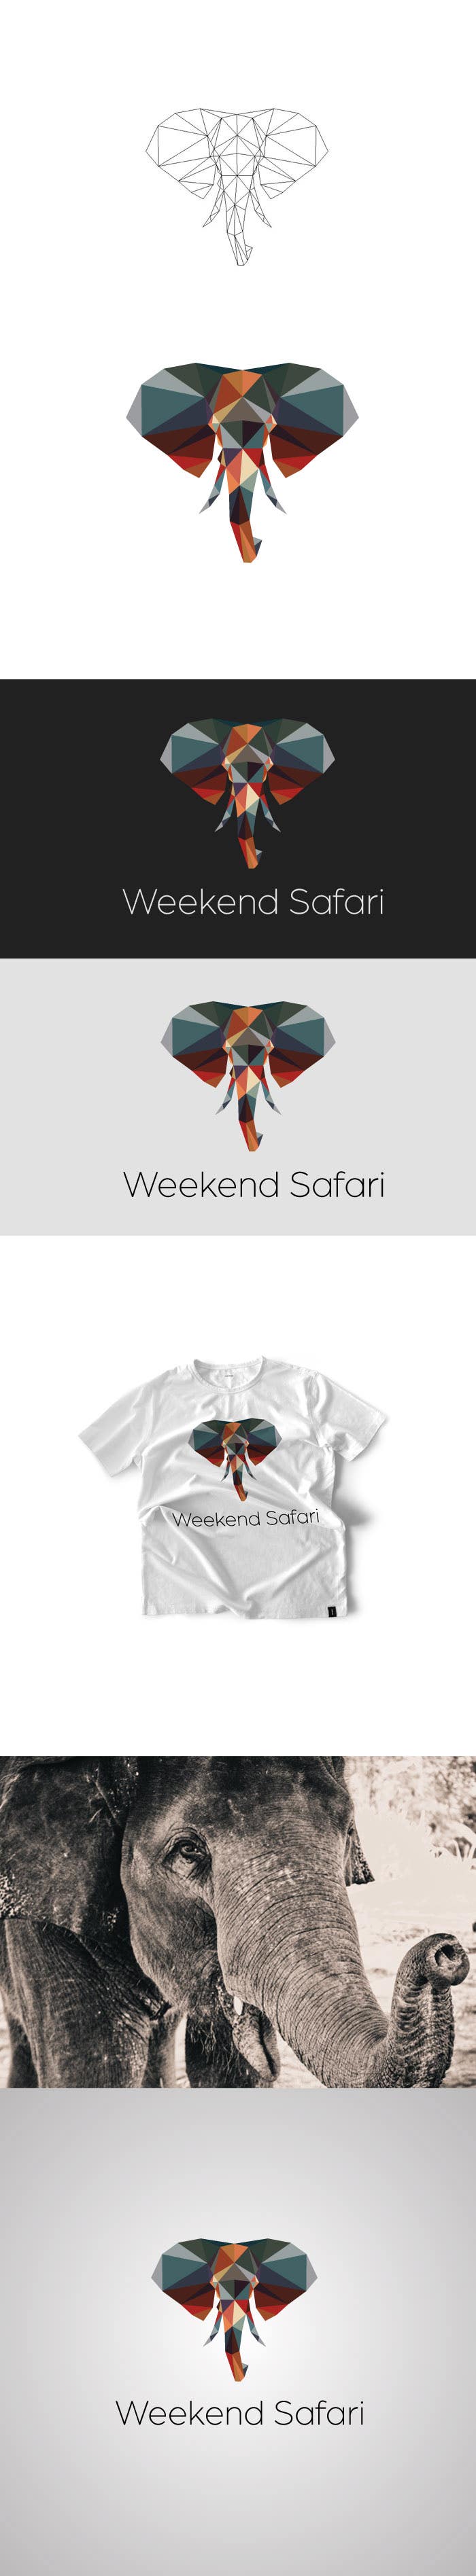 Logo for Weekend Safari